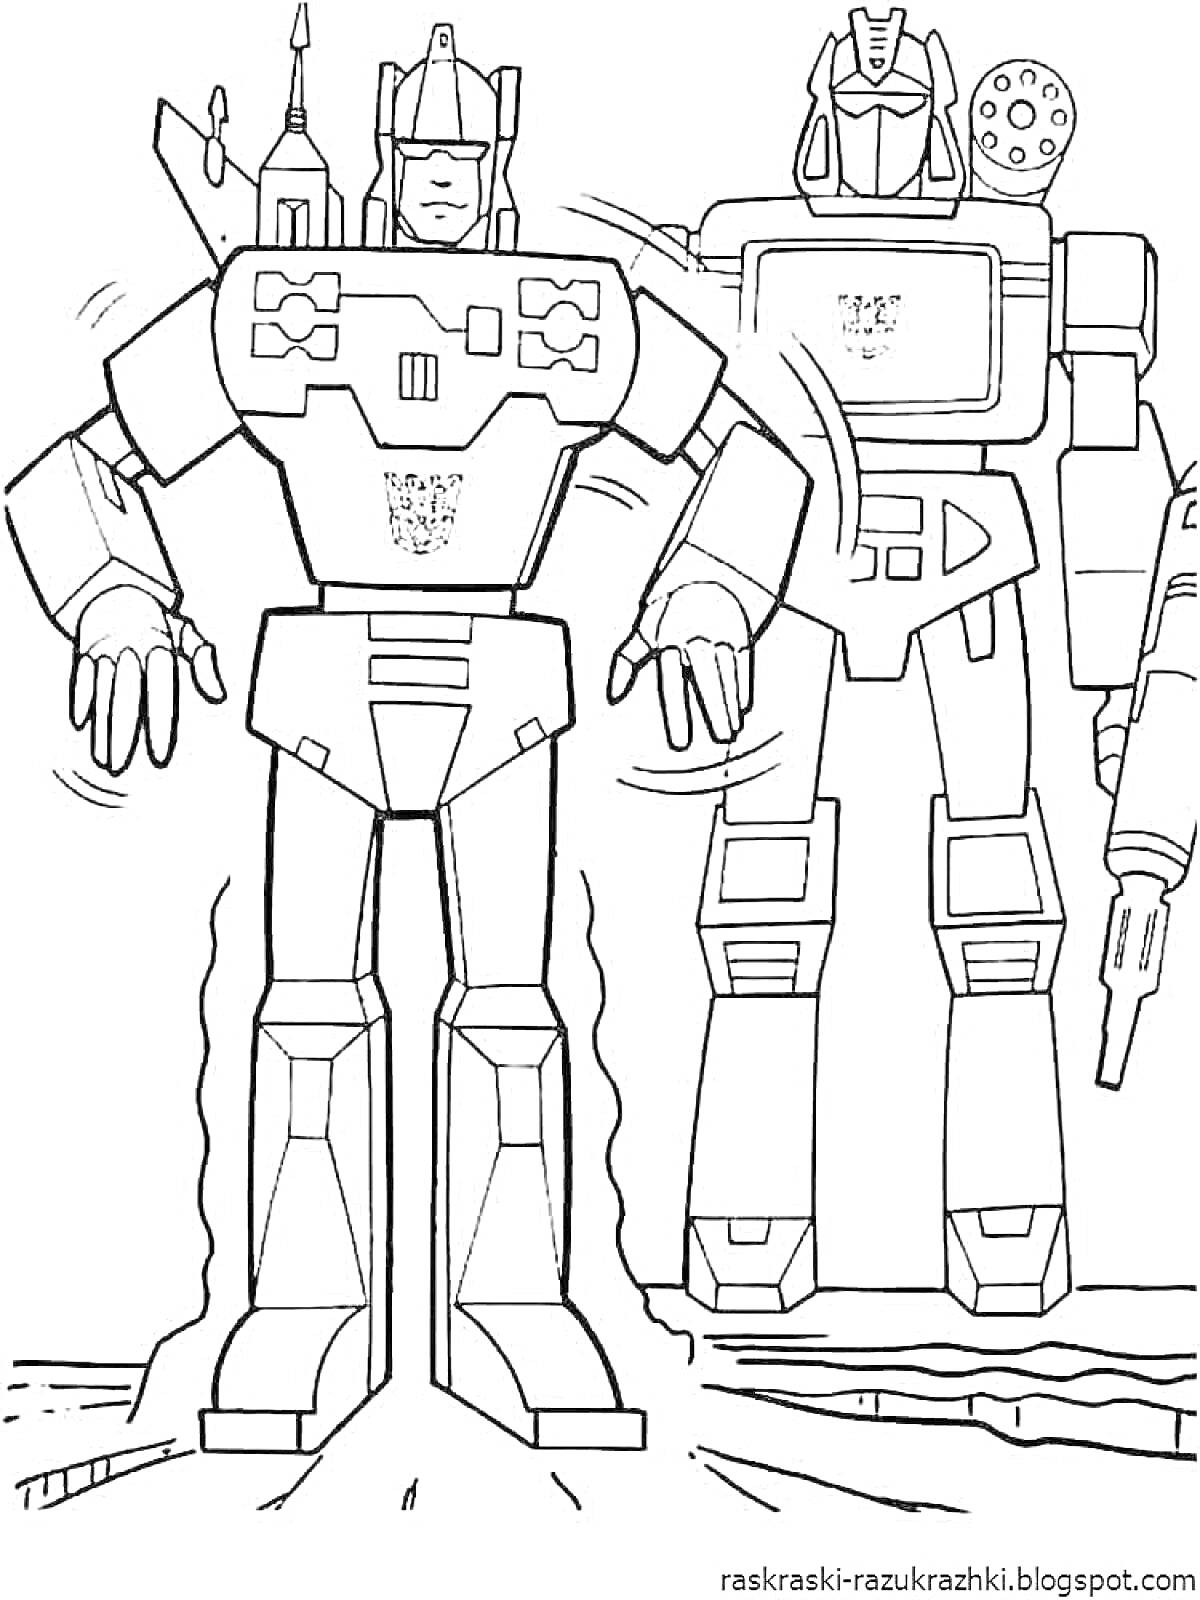 Раскраска Два робота-гиганта с оружием на плечах и в руках, стоящие на земле